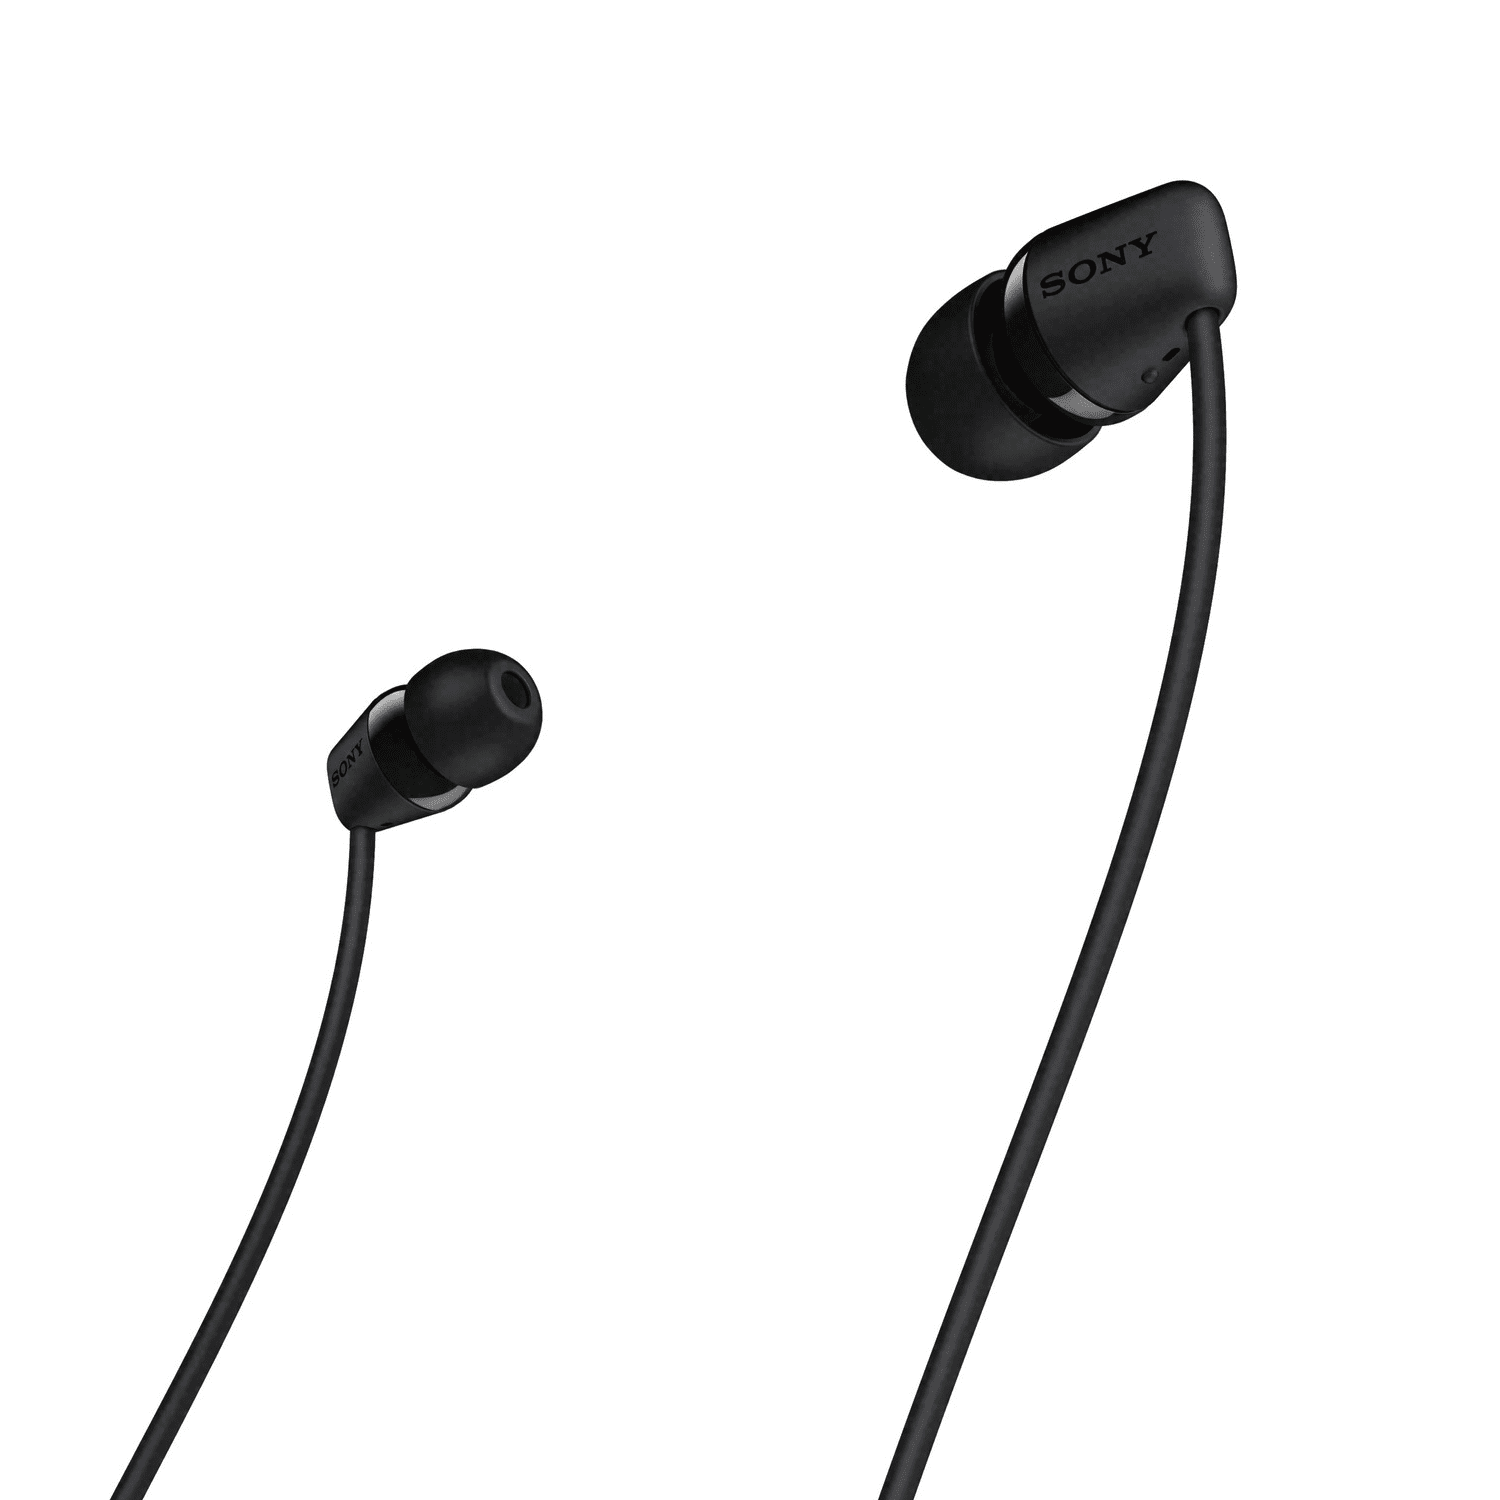 Sony WI-C200 Wireless Bluetooth in-Ear Headphones with Mic, 15 Hrs Bat